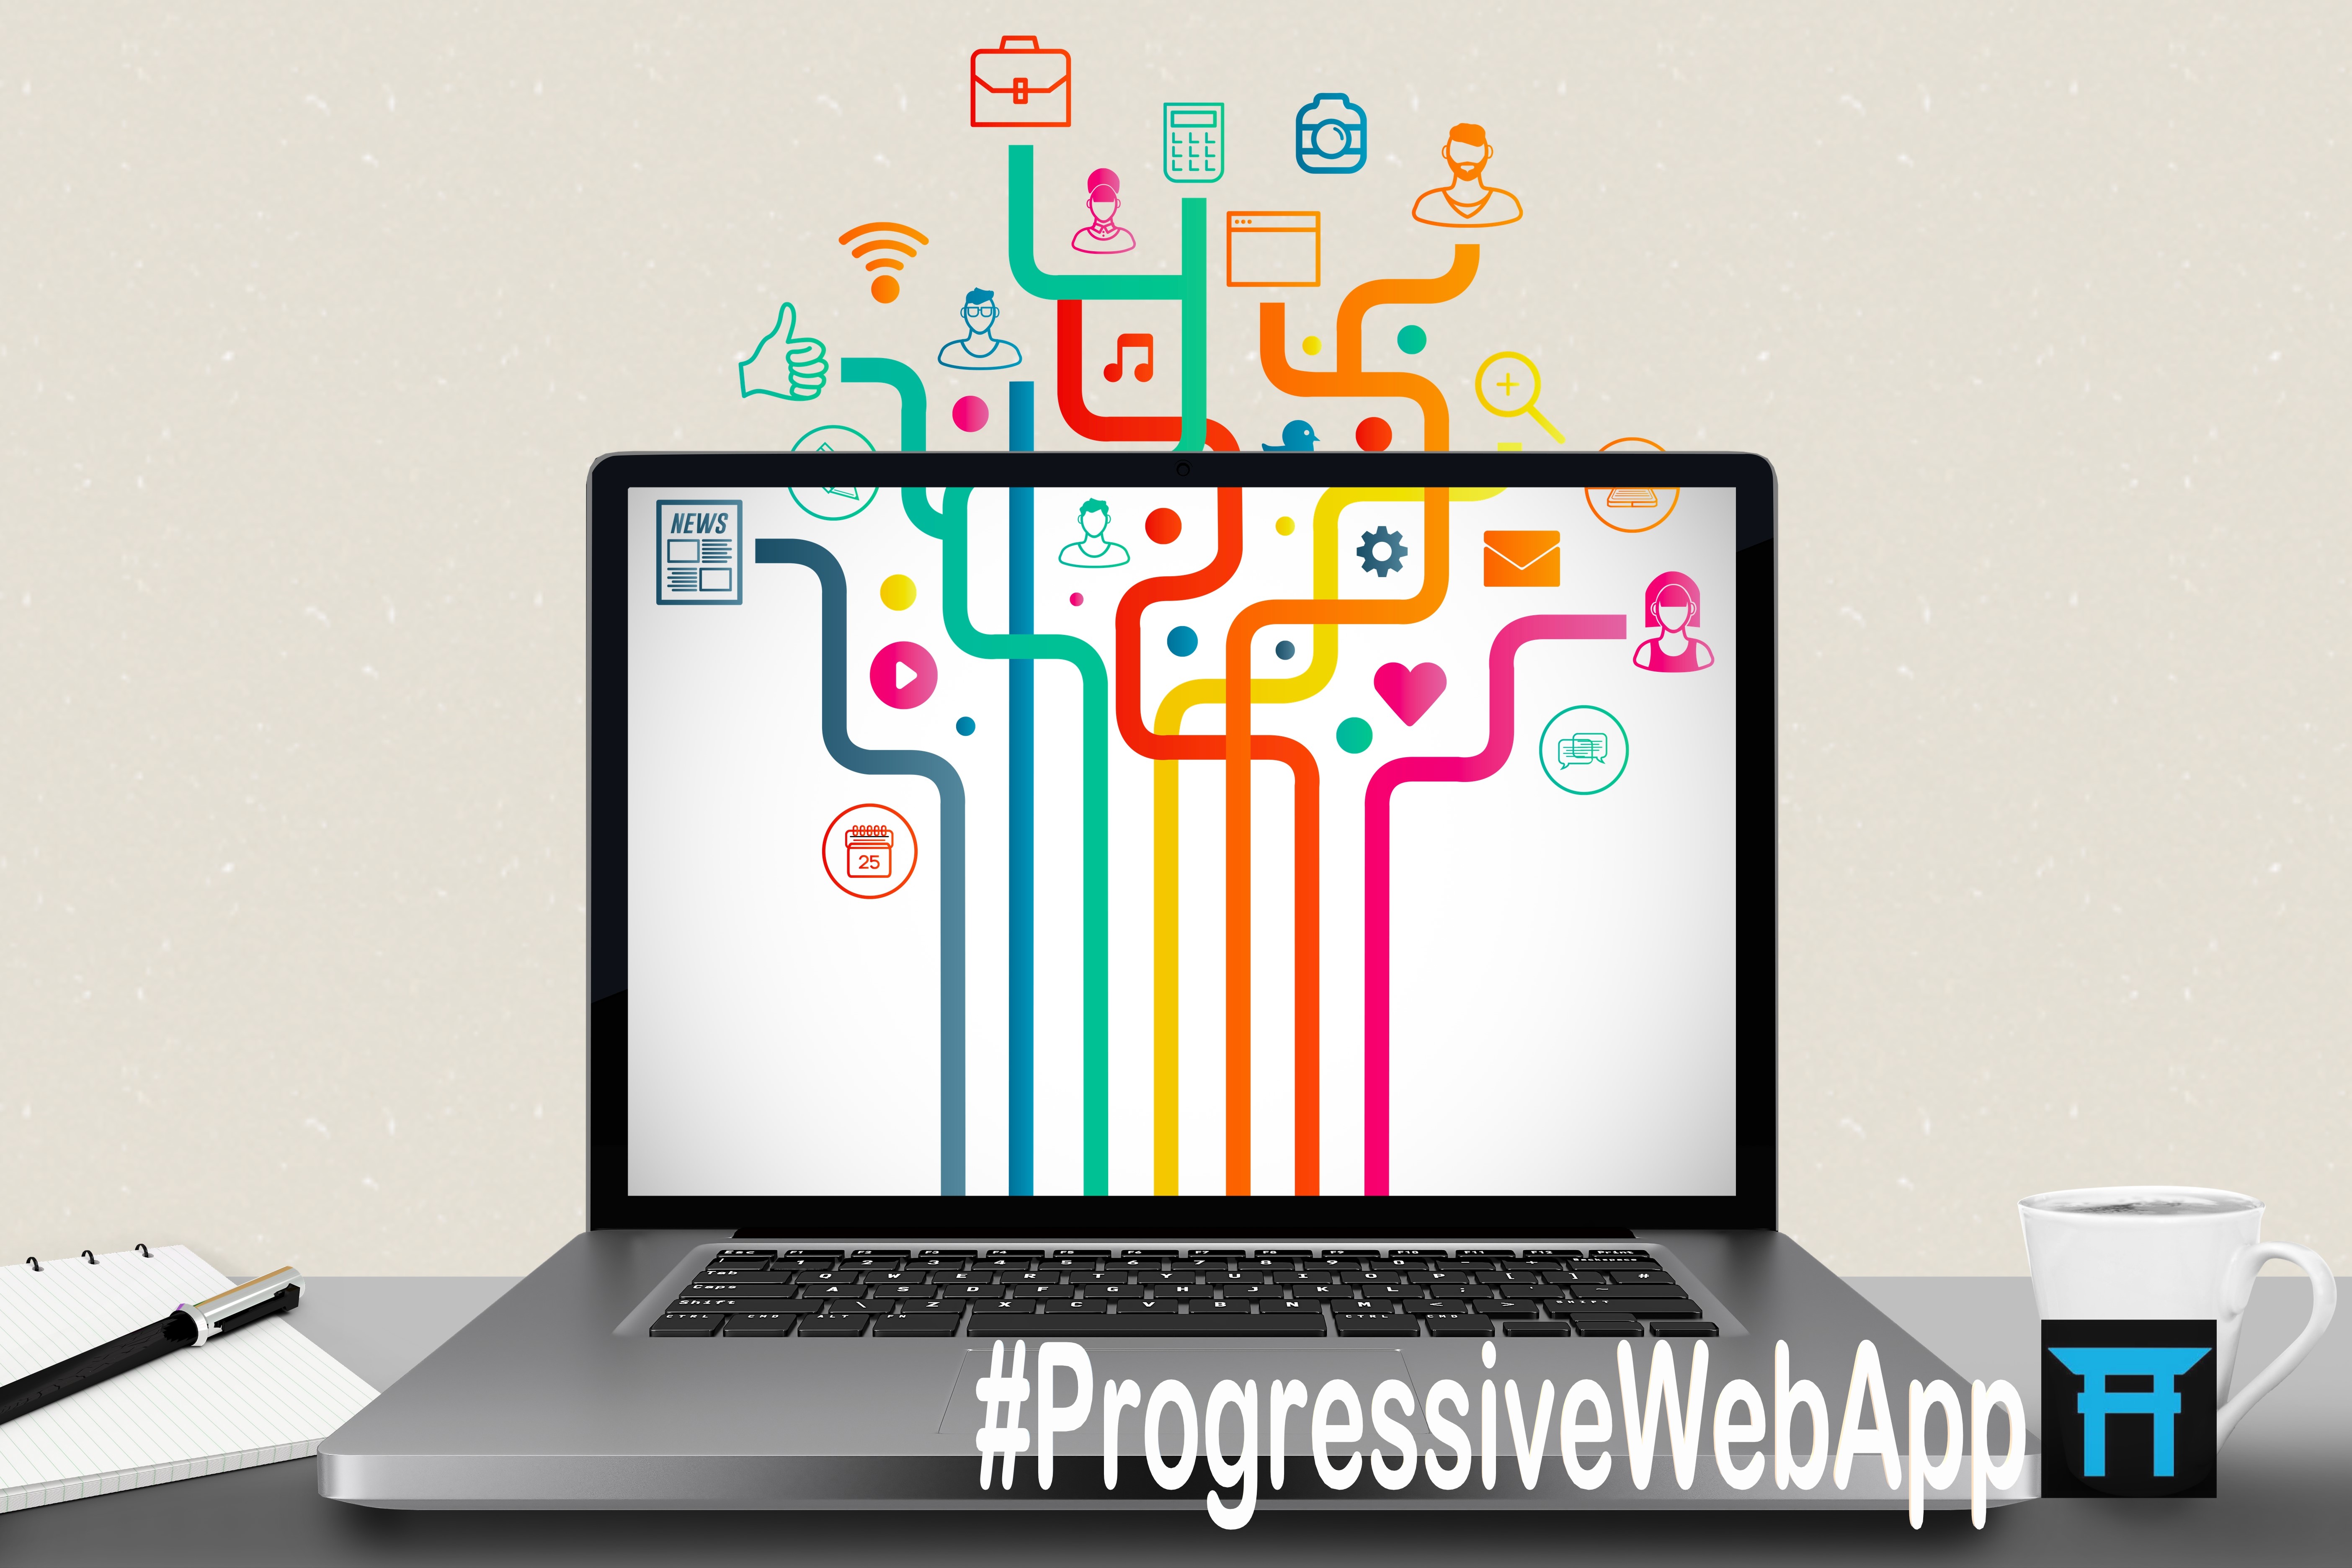 ProgressiveWebApp